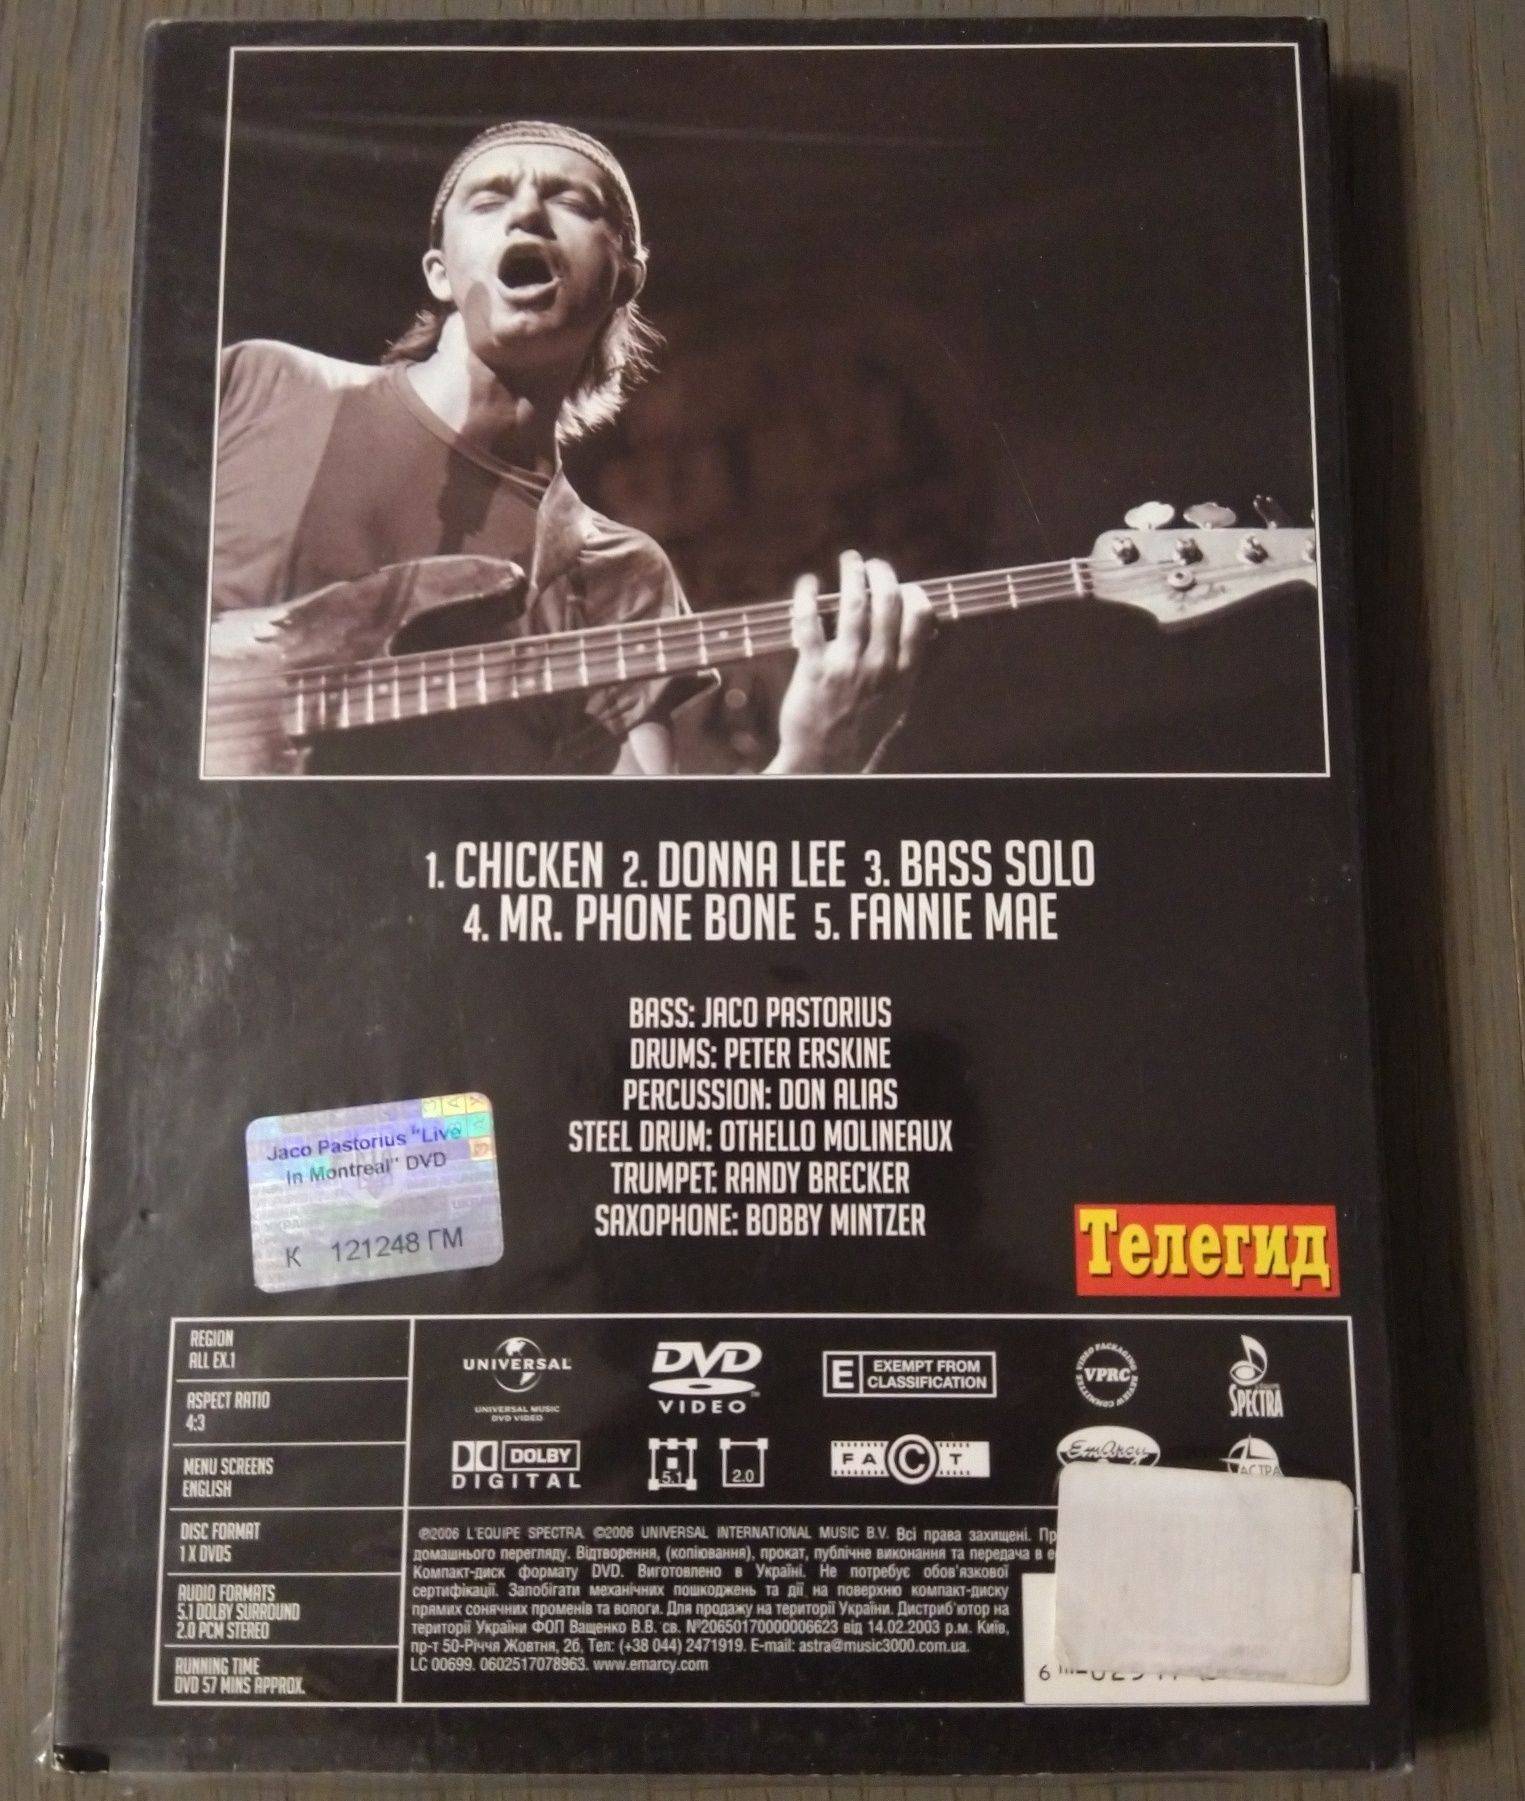 Jaco Pastorius - Live In Montreal DVD